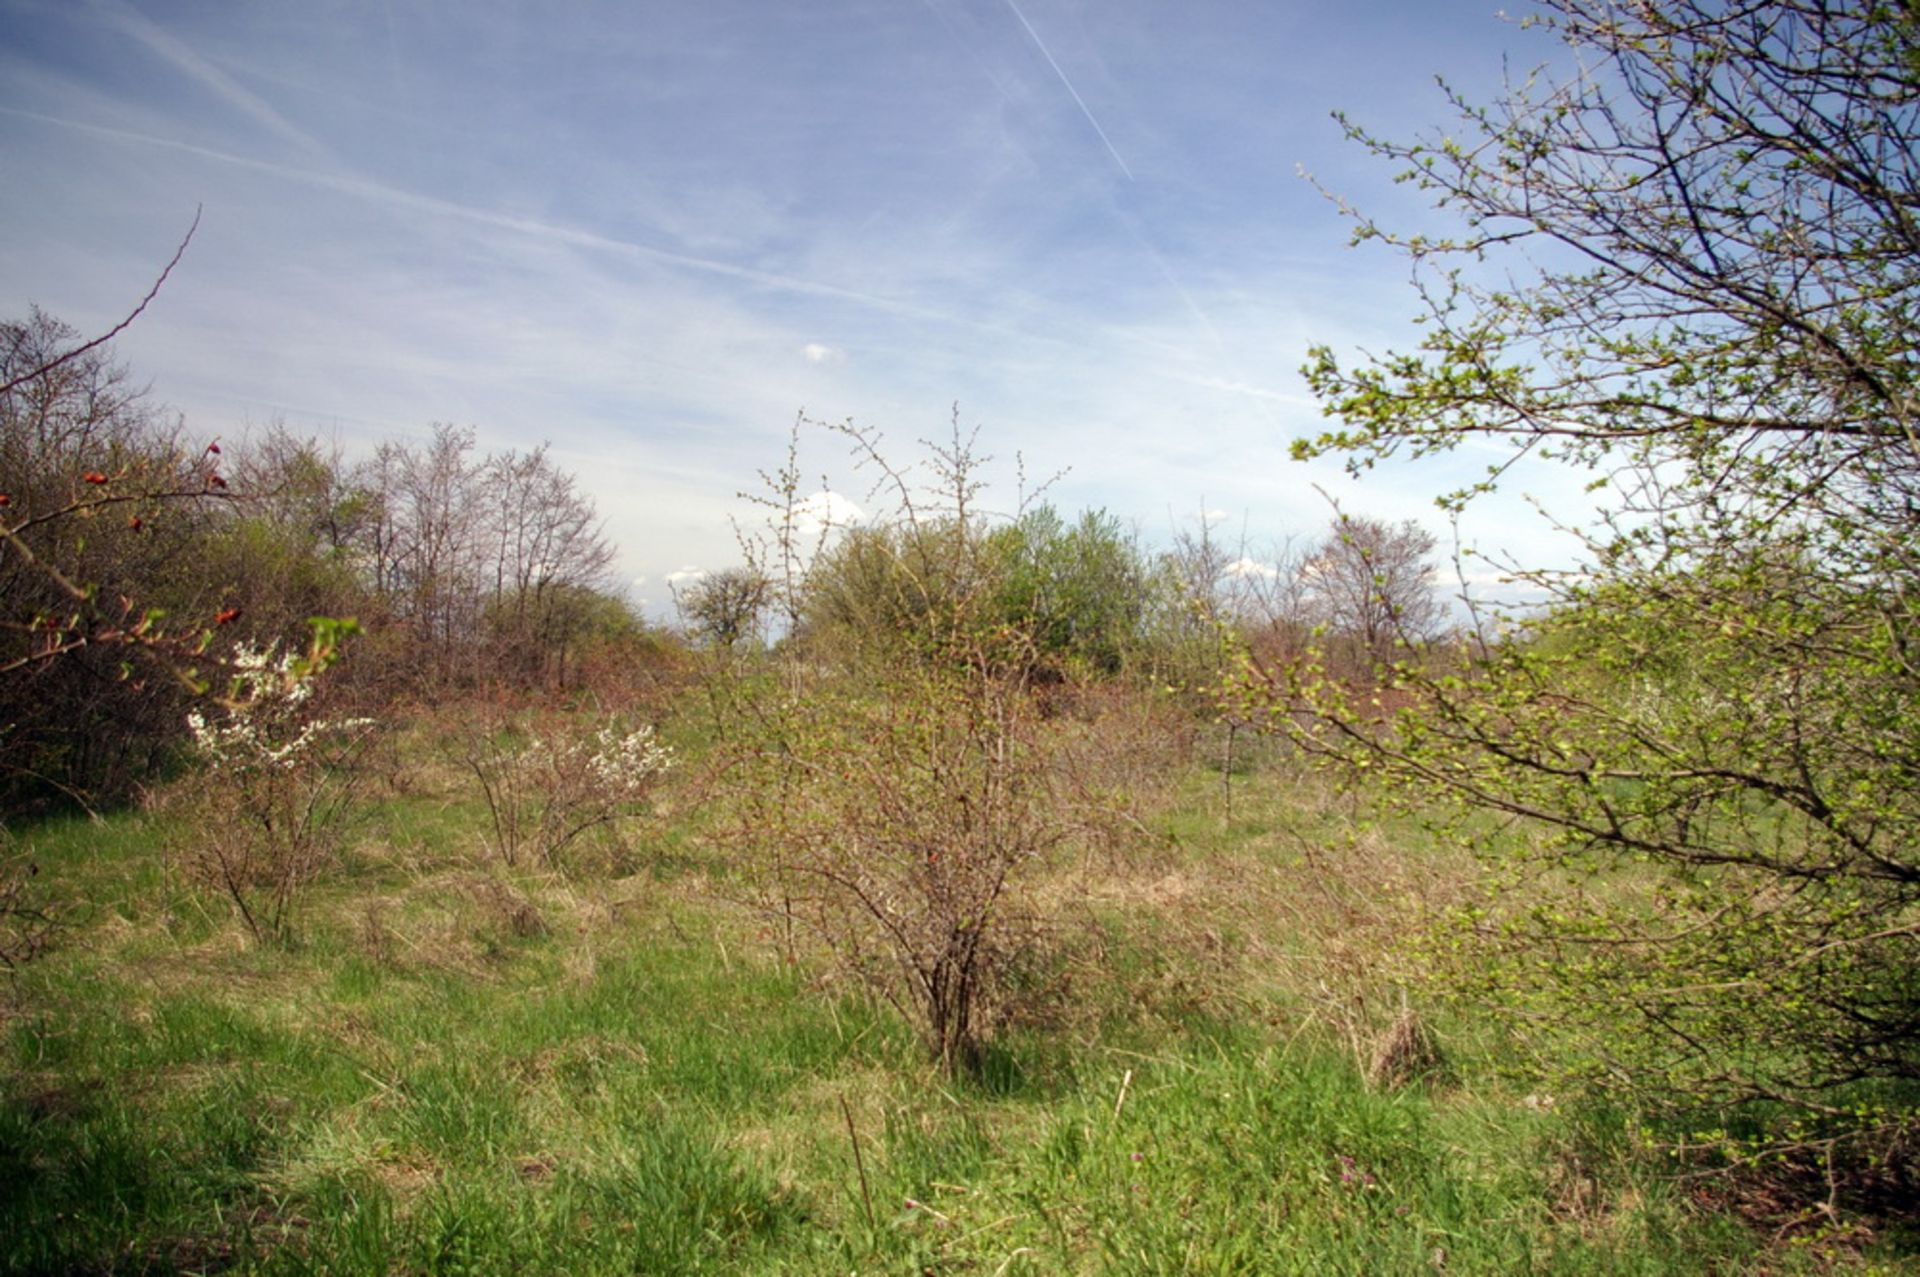 Property in Lagoshevtsi, Vidin region, Bulgaria, with 1.26 Acre land - Image 5 of 17